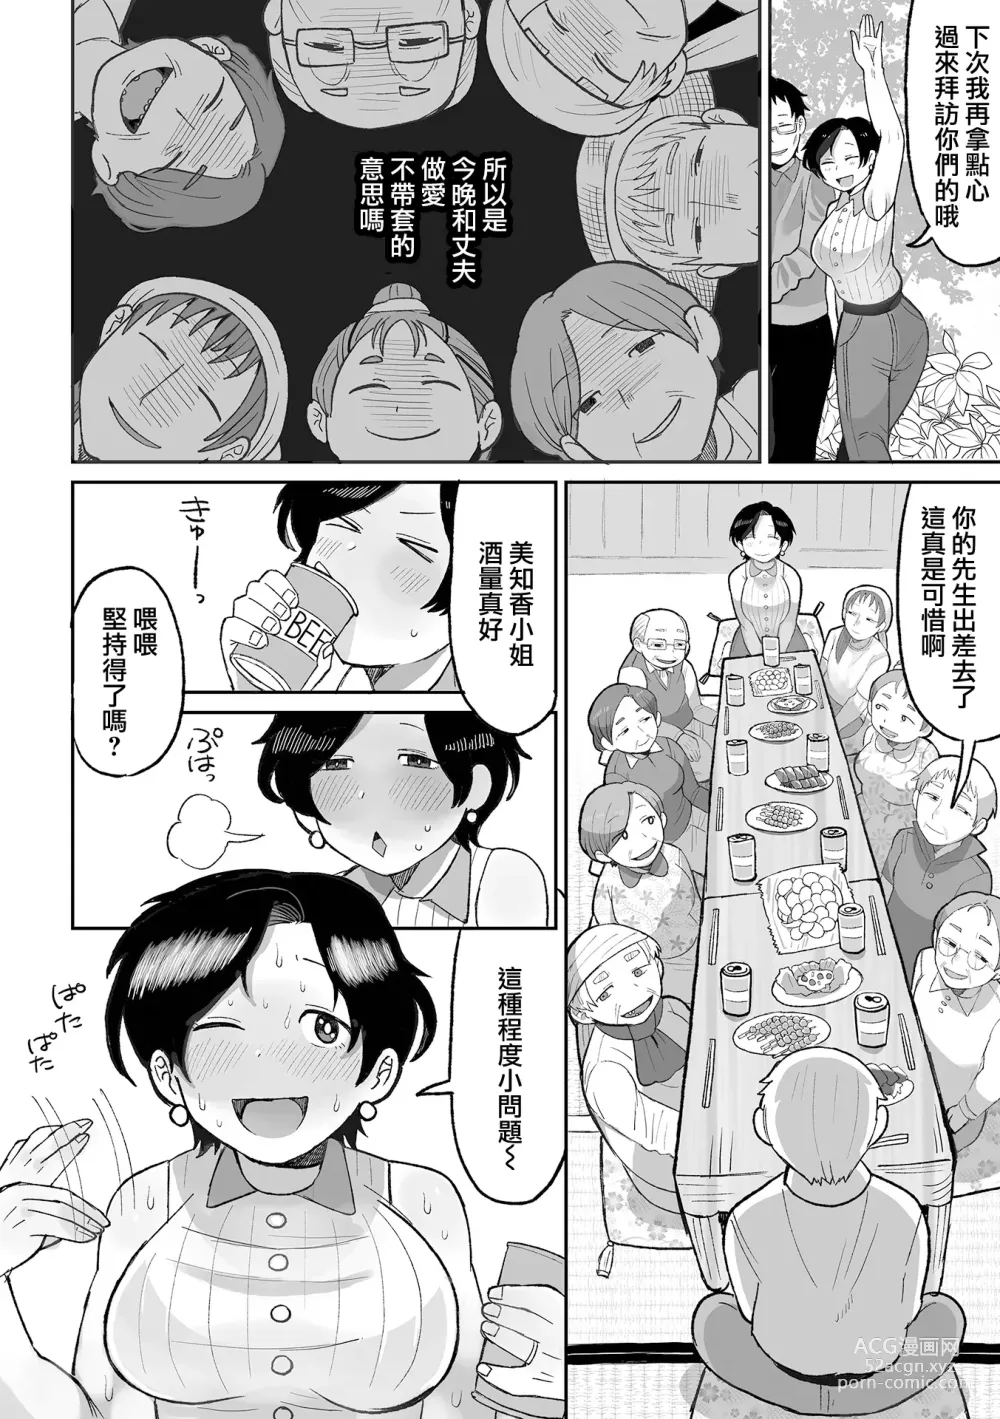 Page 5 of manga 快樂的鄉間生活